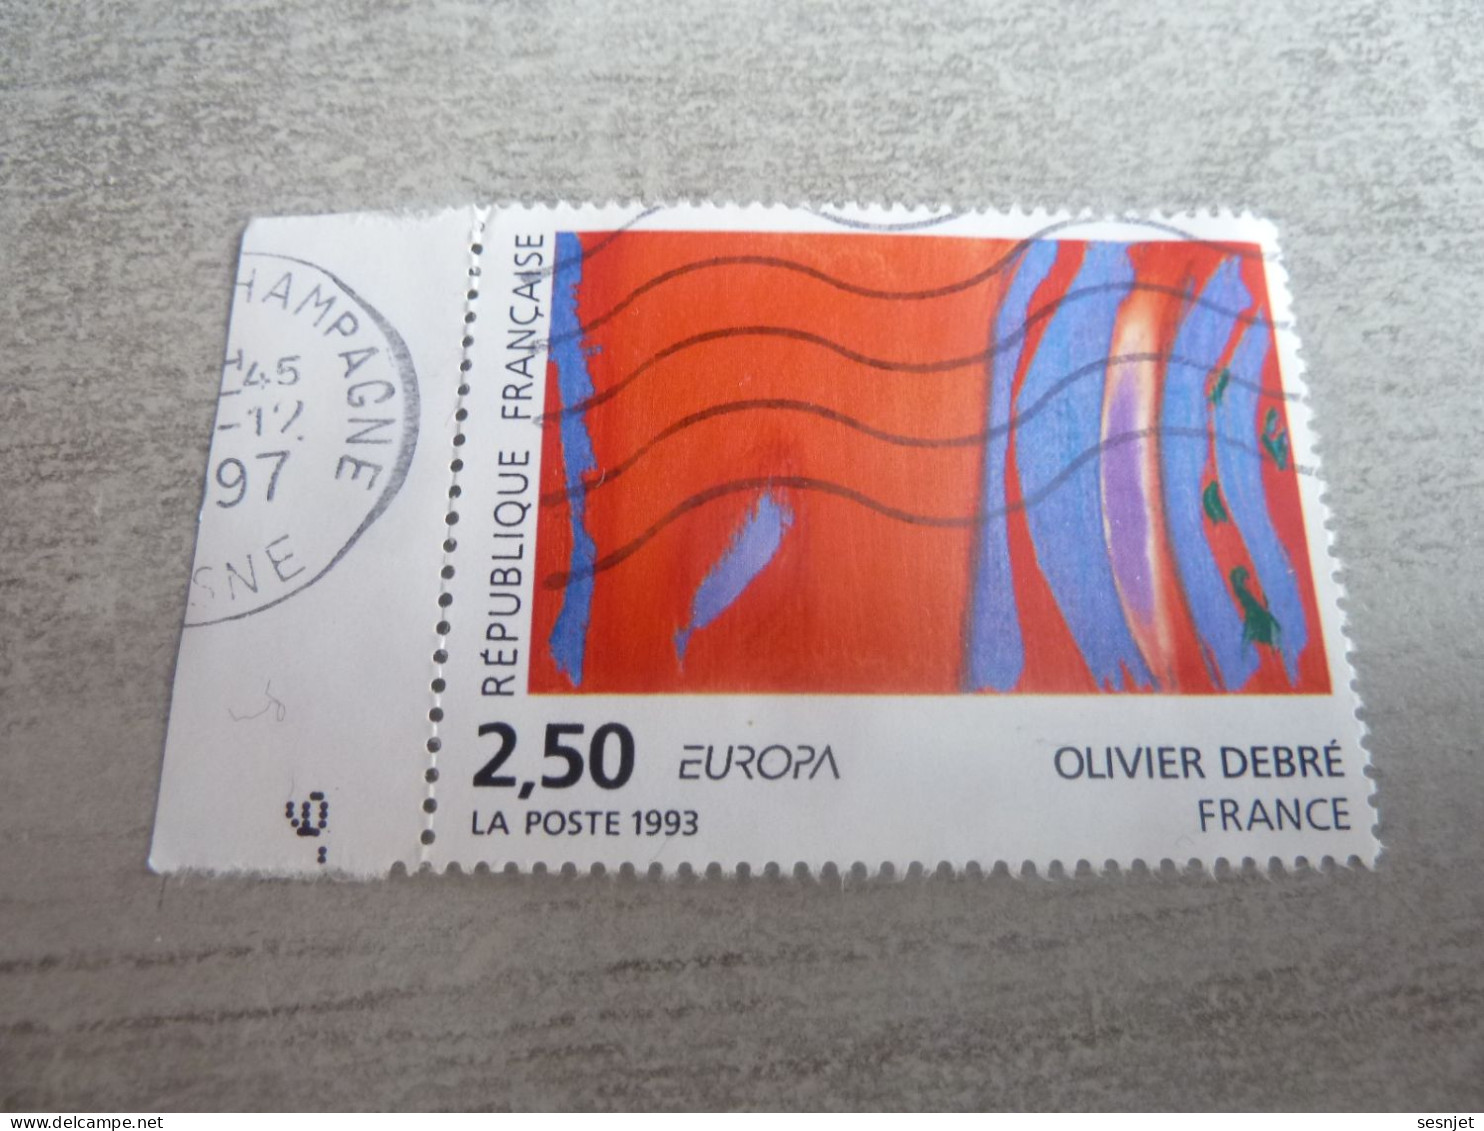 Olivier Debré (1920-1999) - Europa - 2f.50 - Yt 2797 - Rouge, Bleu, Vert Et Violet - Oblitéré - Année 1993 - - 1993